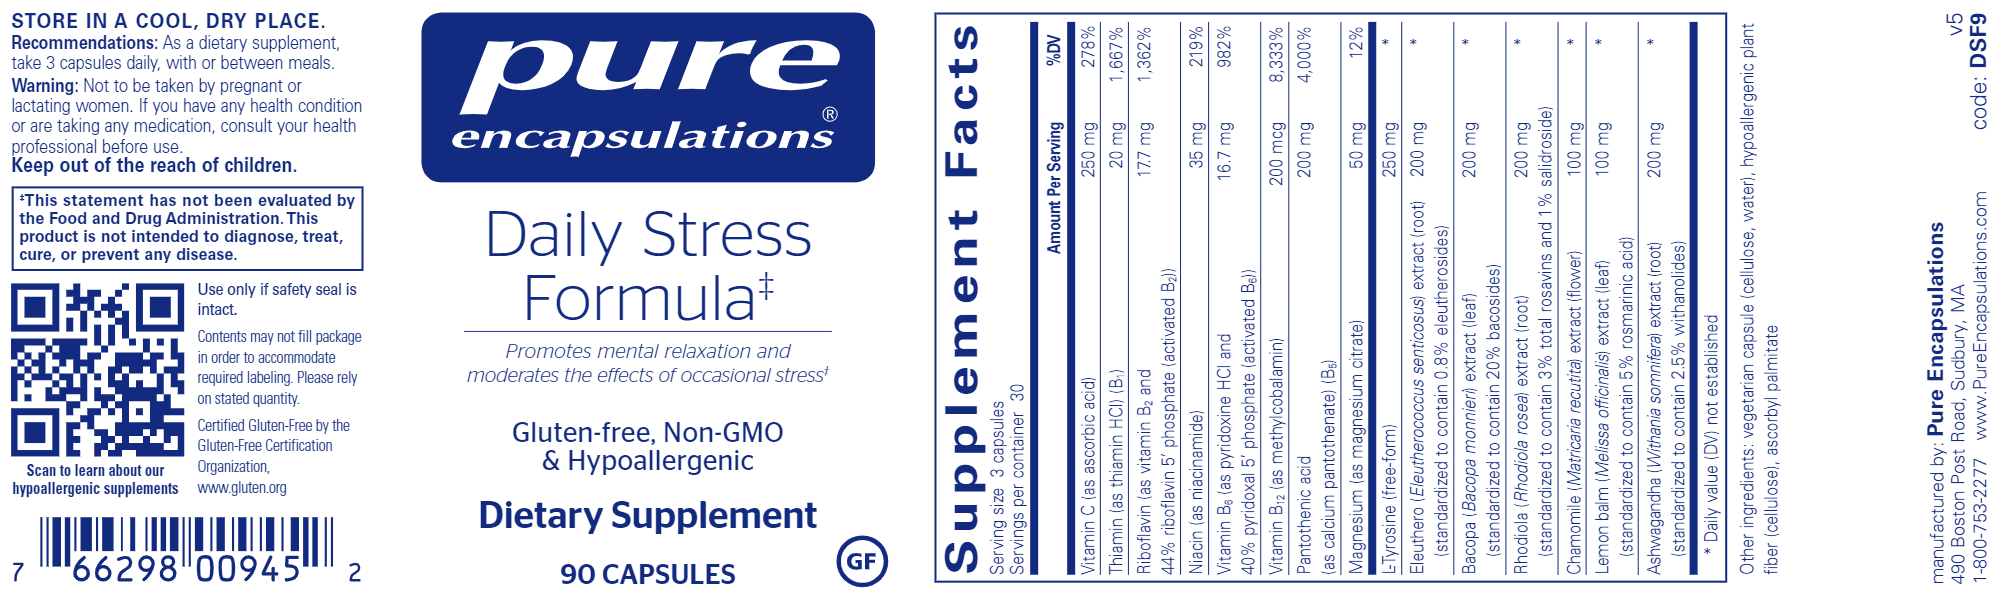 Daily Stress Formula 90 caps bottle label ingredients